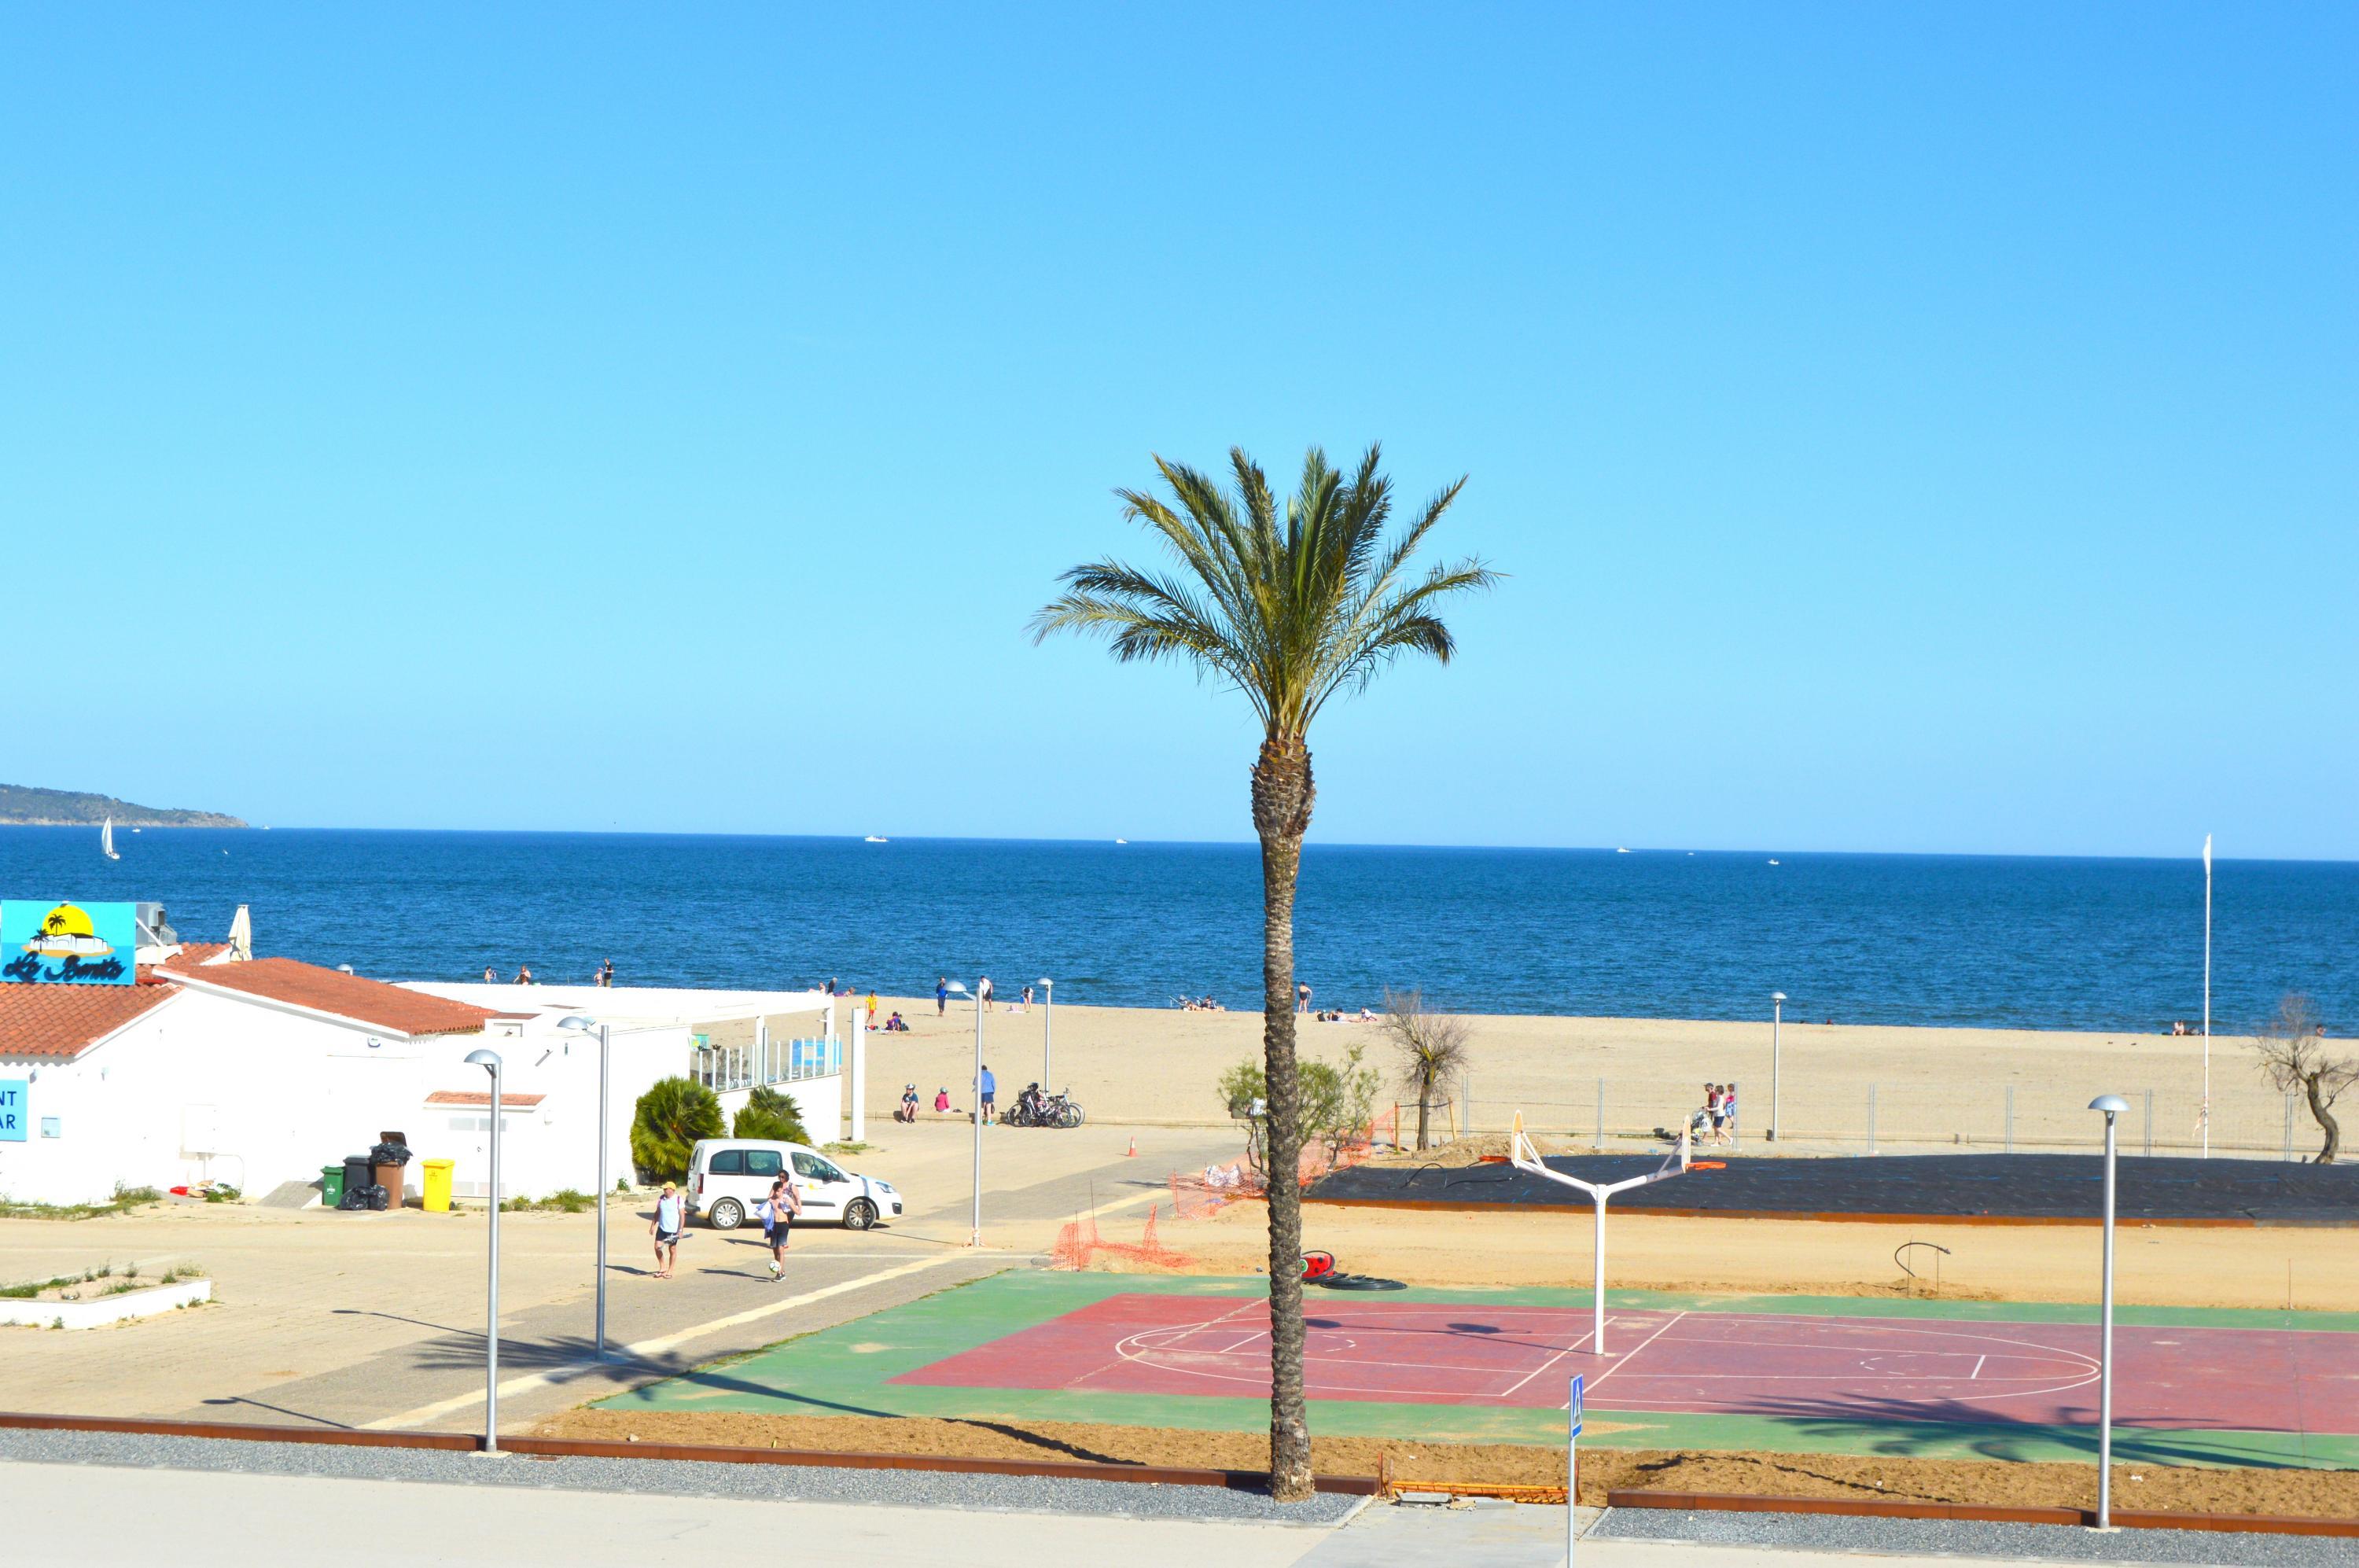 153 Apartamento de 3 dormitorios vistas al mar Piso Gran Reserva Castelló d'Empúries